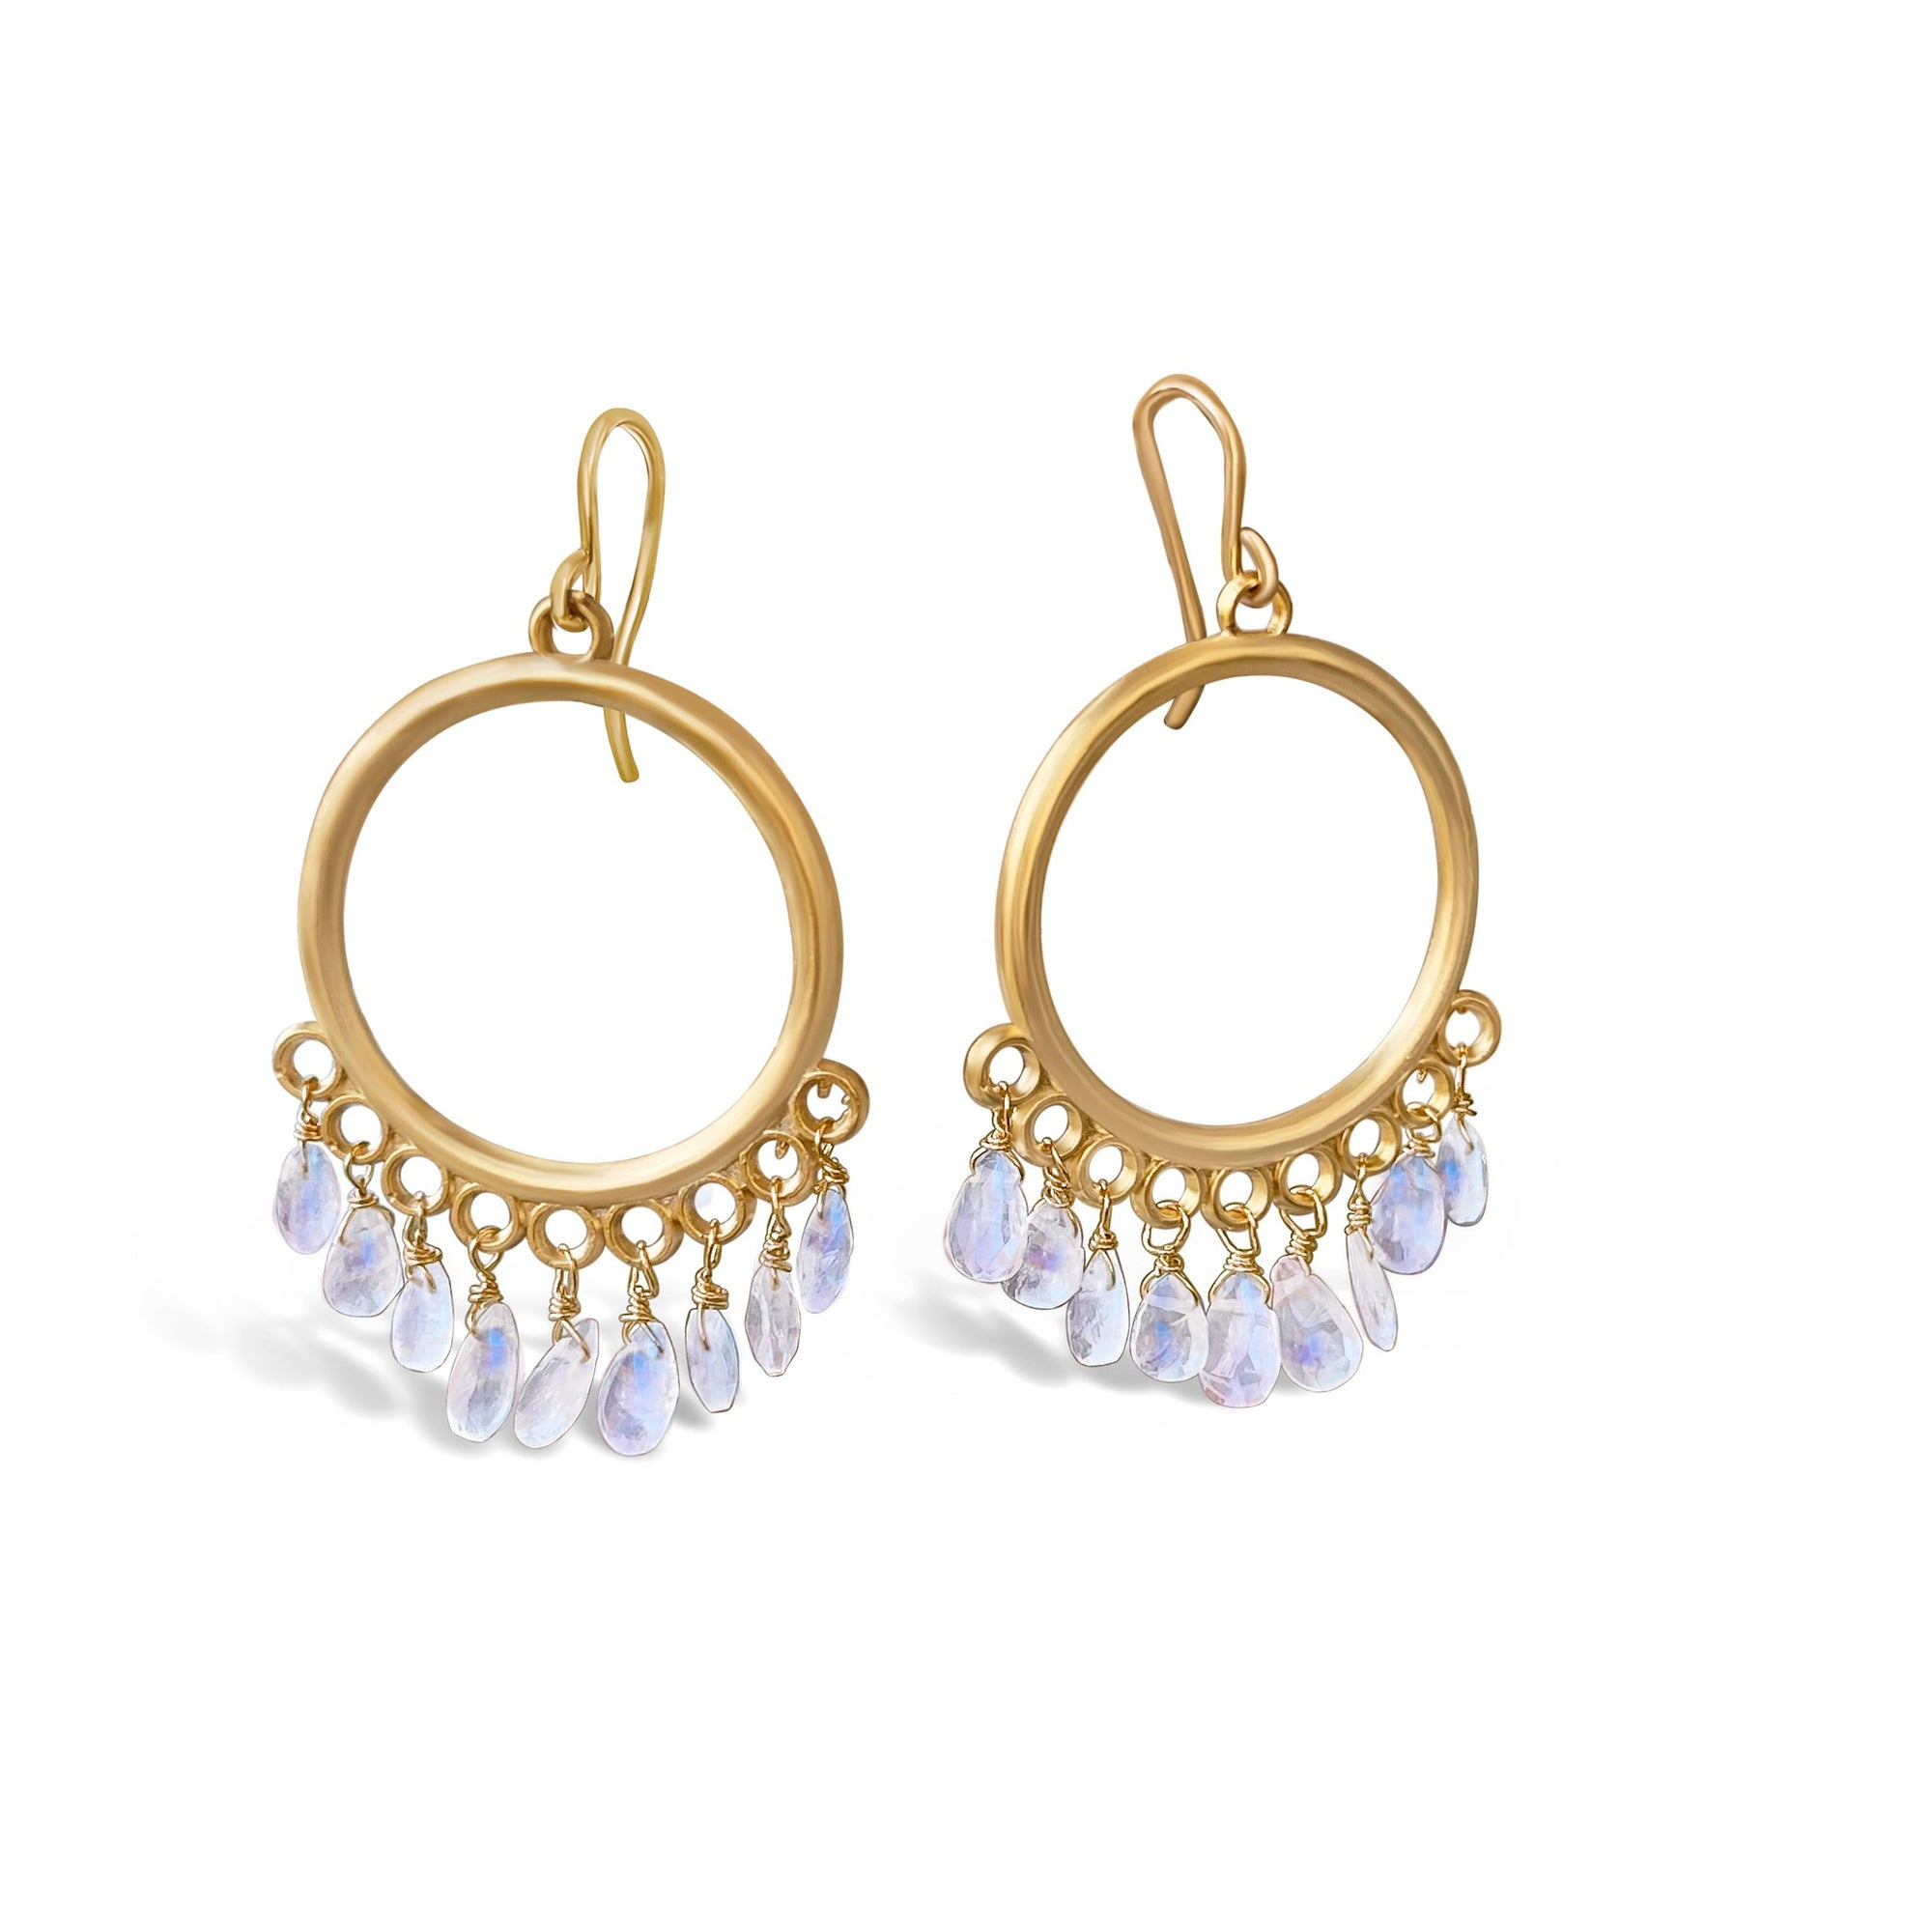 Rainbow Moonstone Chandelier Hoop Earrings | 22k Gold Plated Indian Jewelry